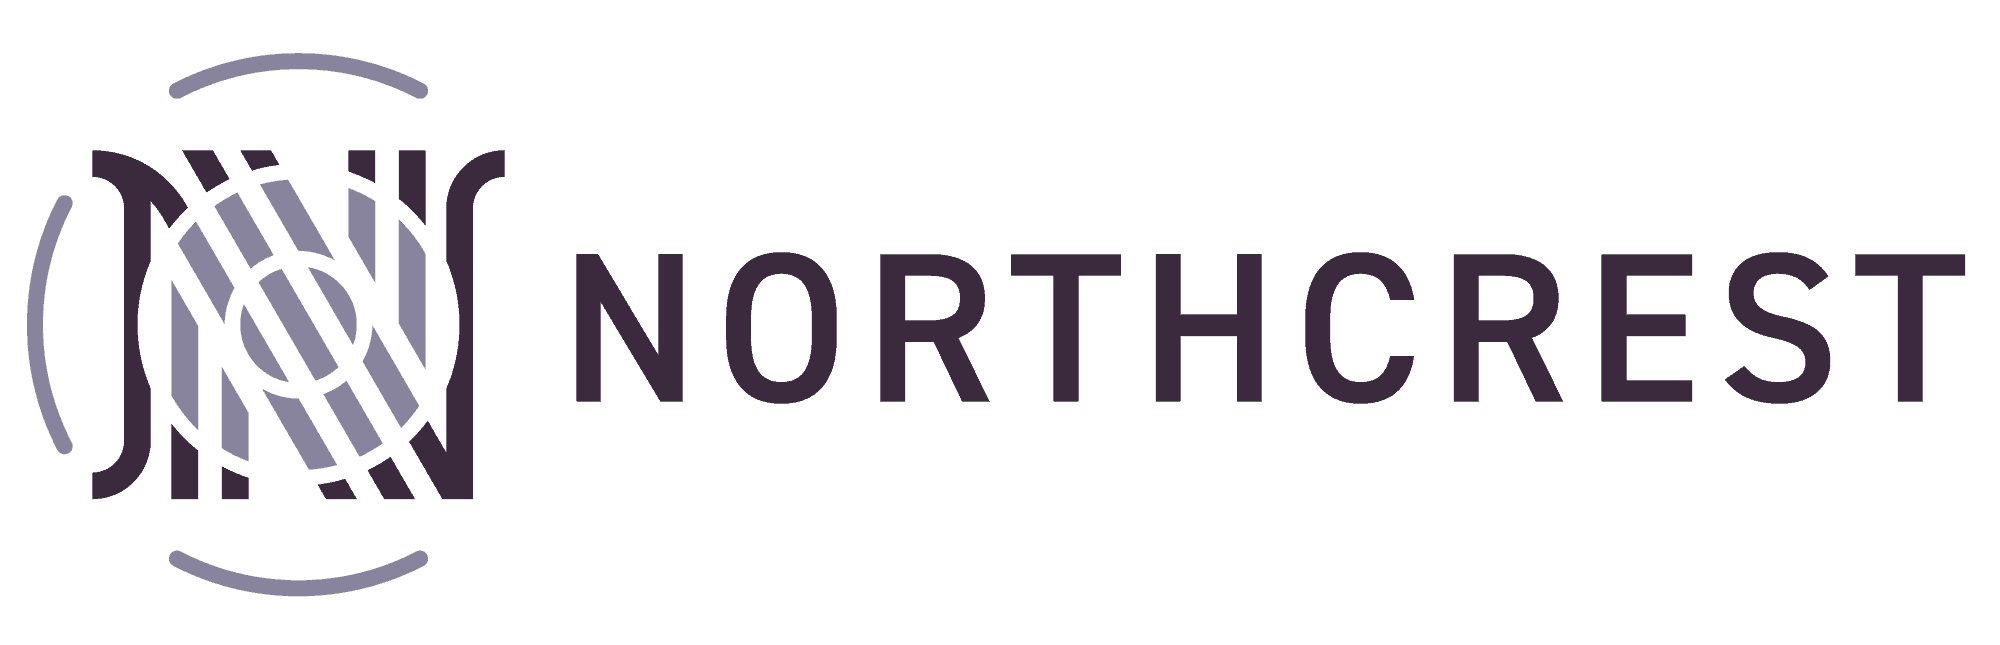 northcrest_long_light_rgb